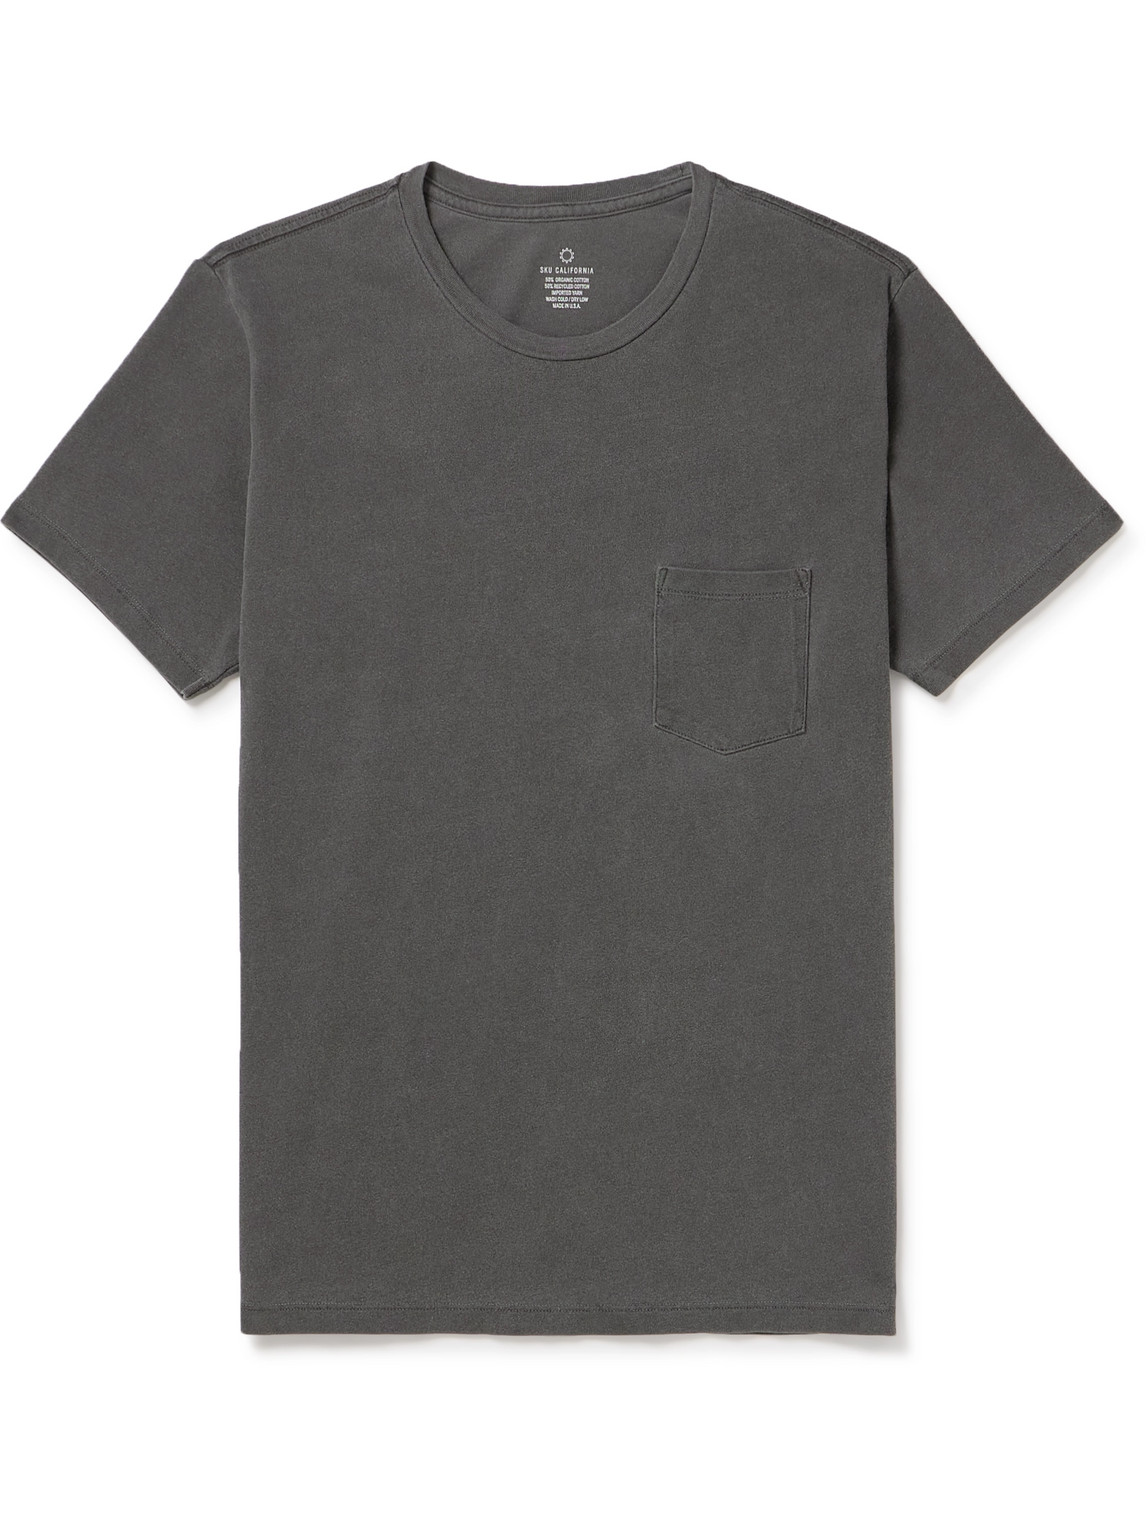 Save Khaki United - Garment-Dyed Cotton-Jersey T-Shirt - Men - Gray - M von Save Khaki United